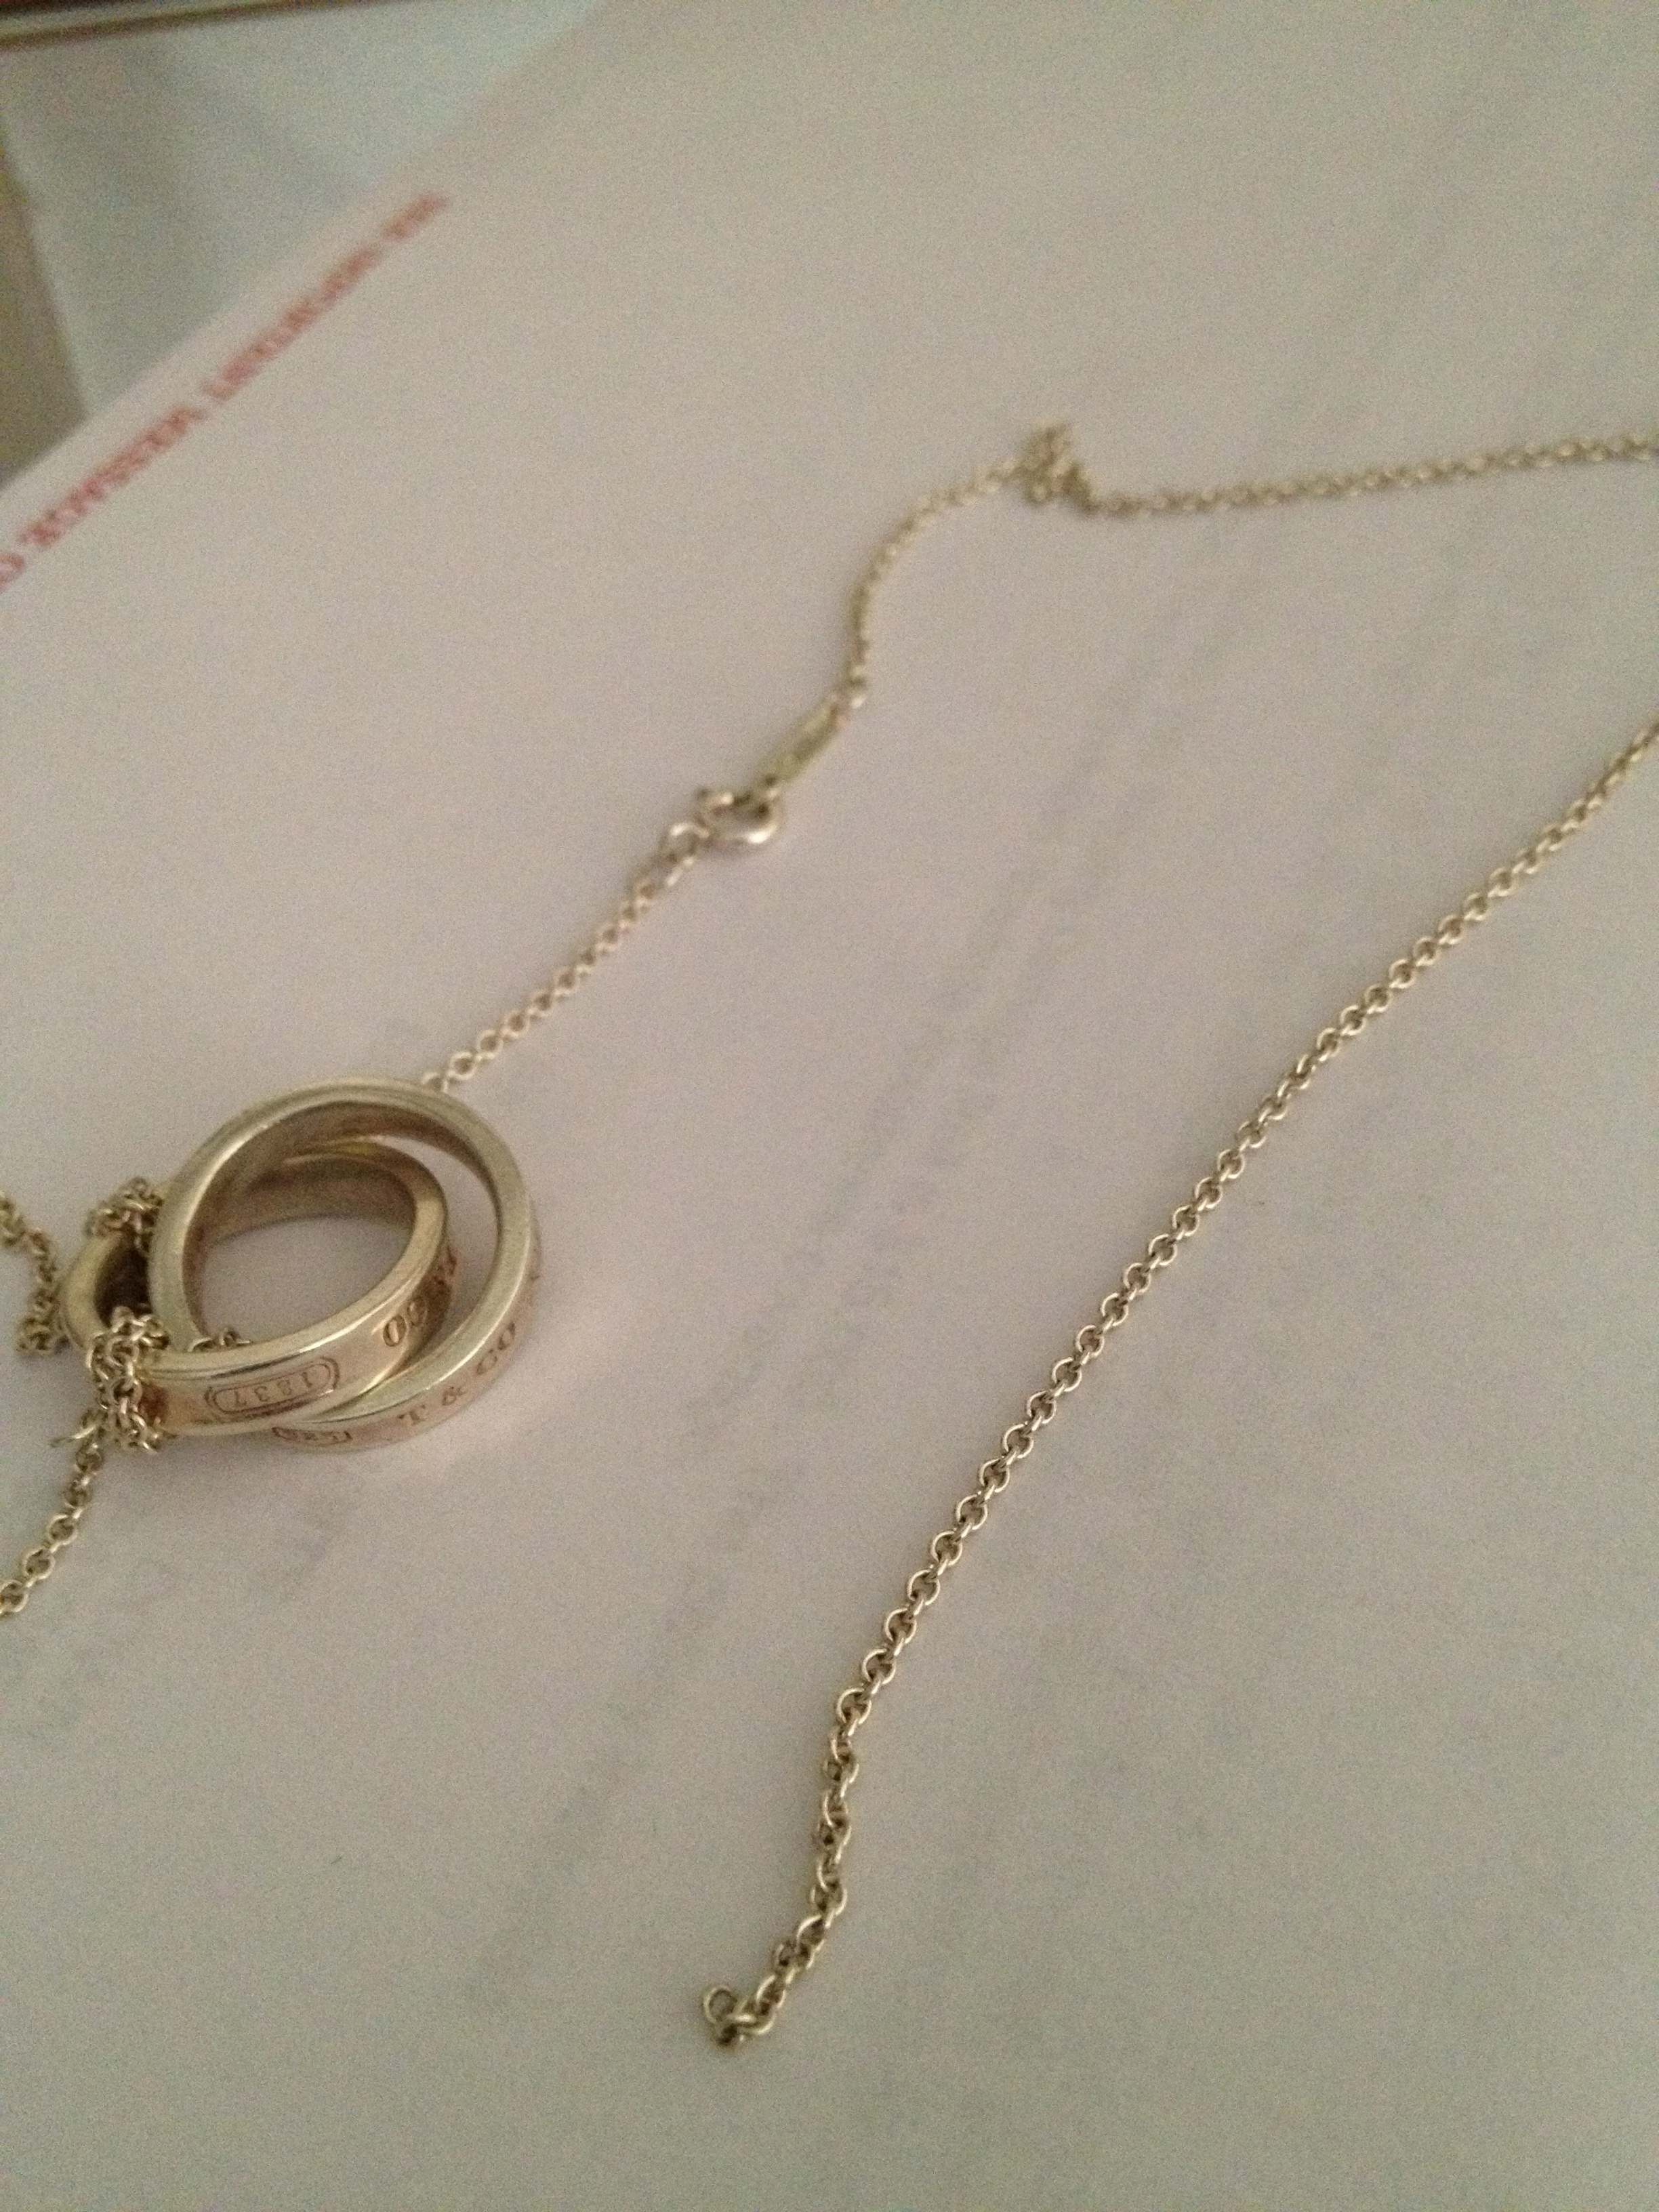 tiffany necklace broken chain